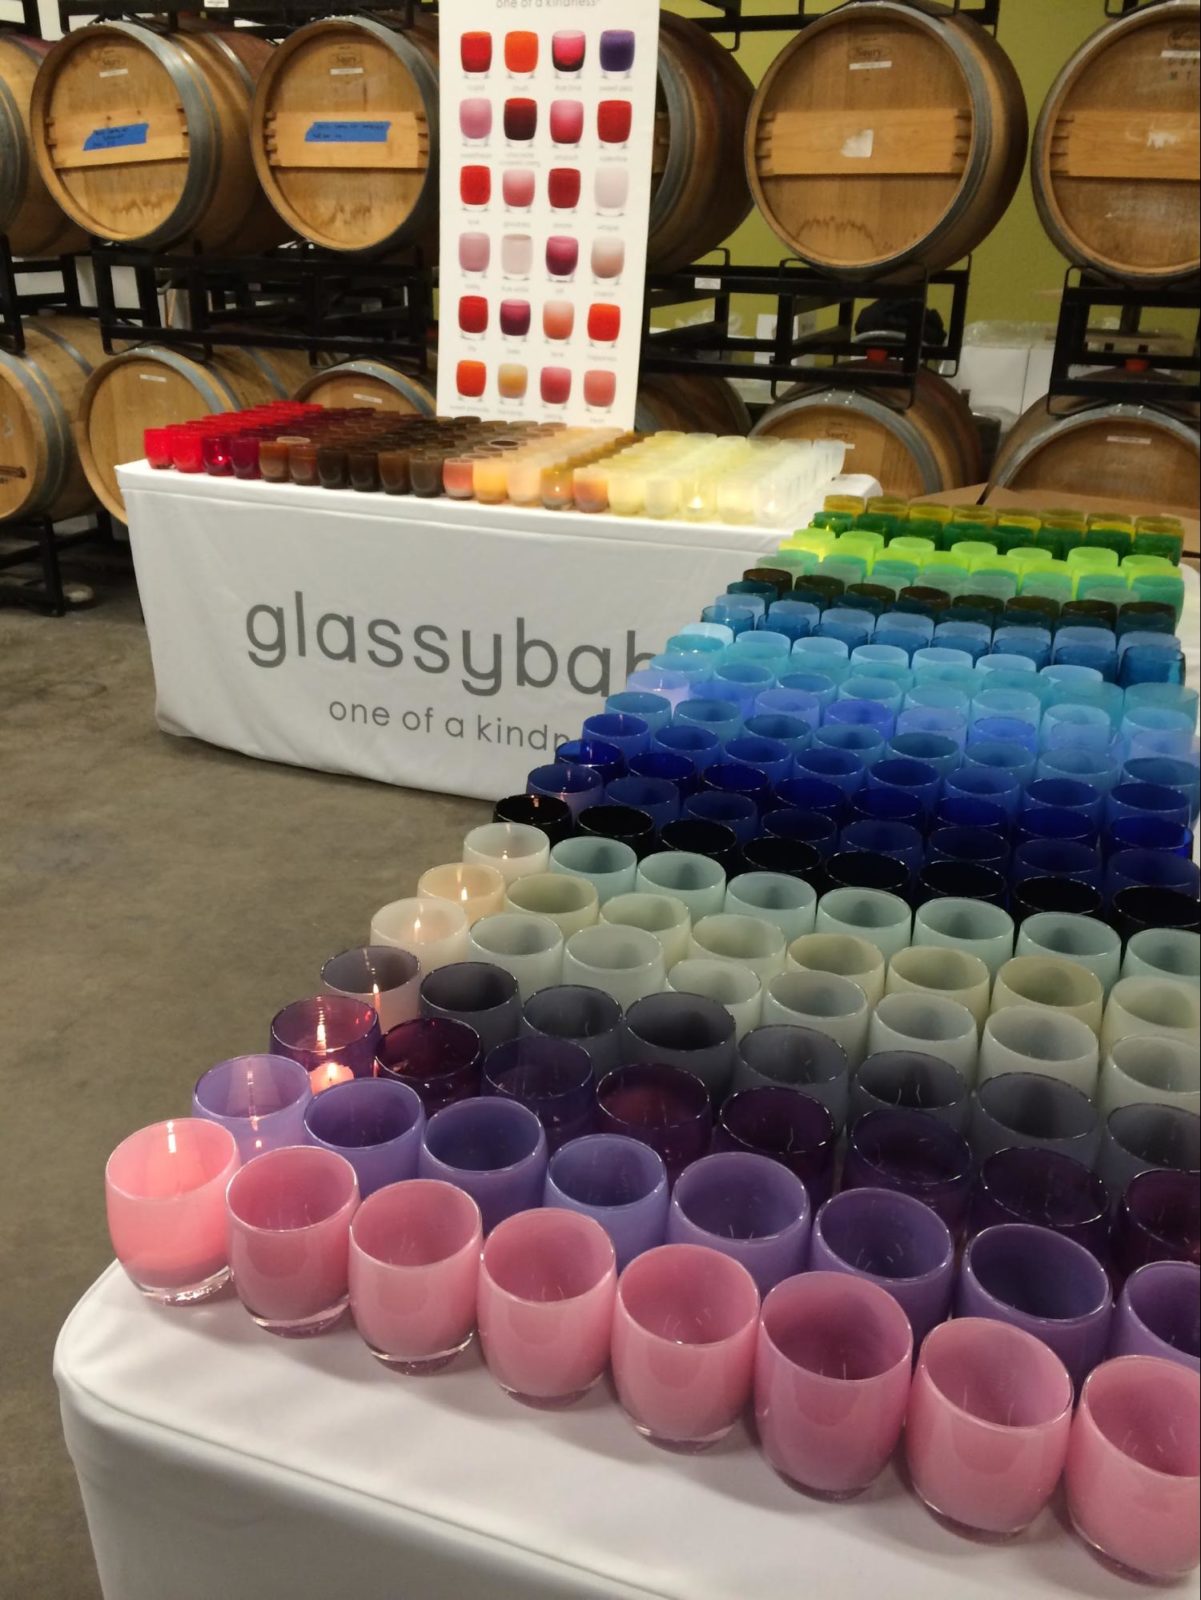 Glassybaby marketing table